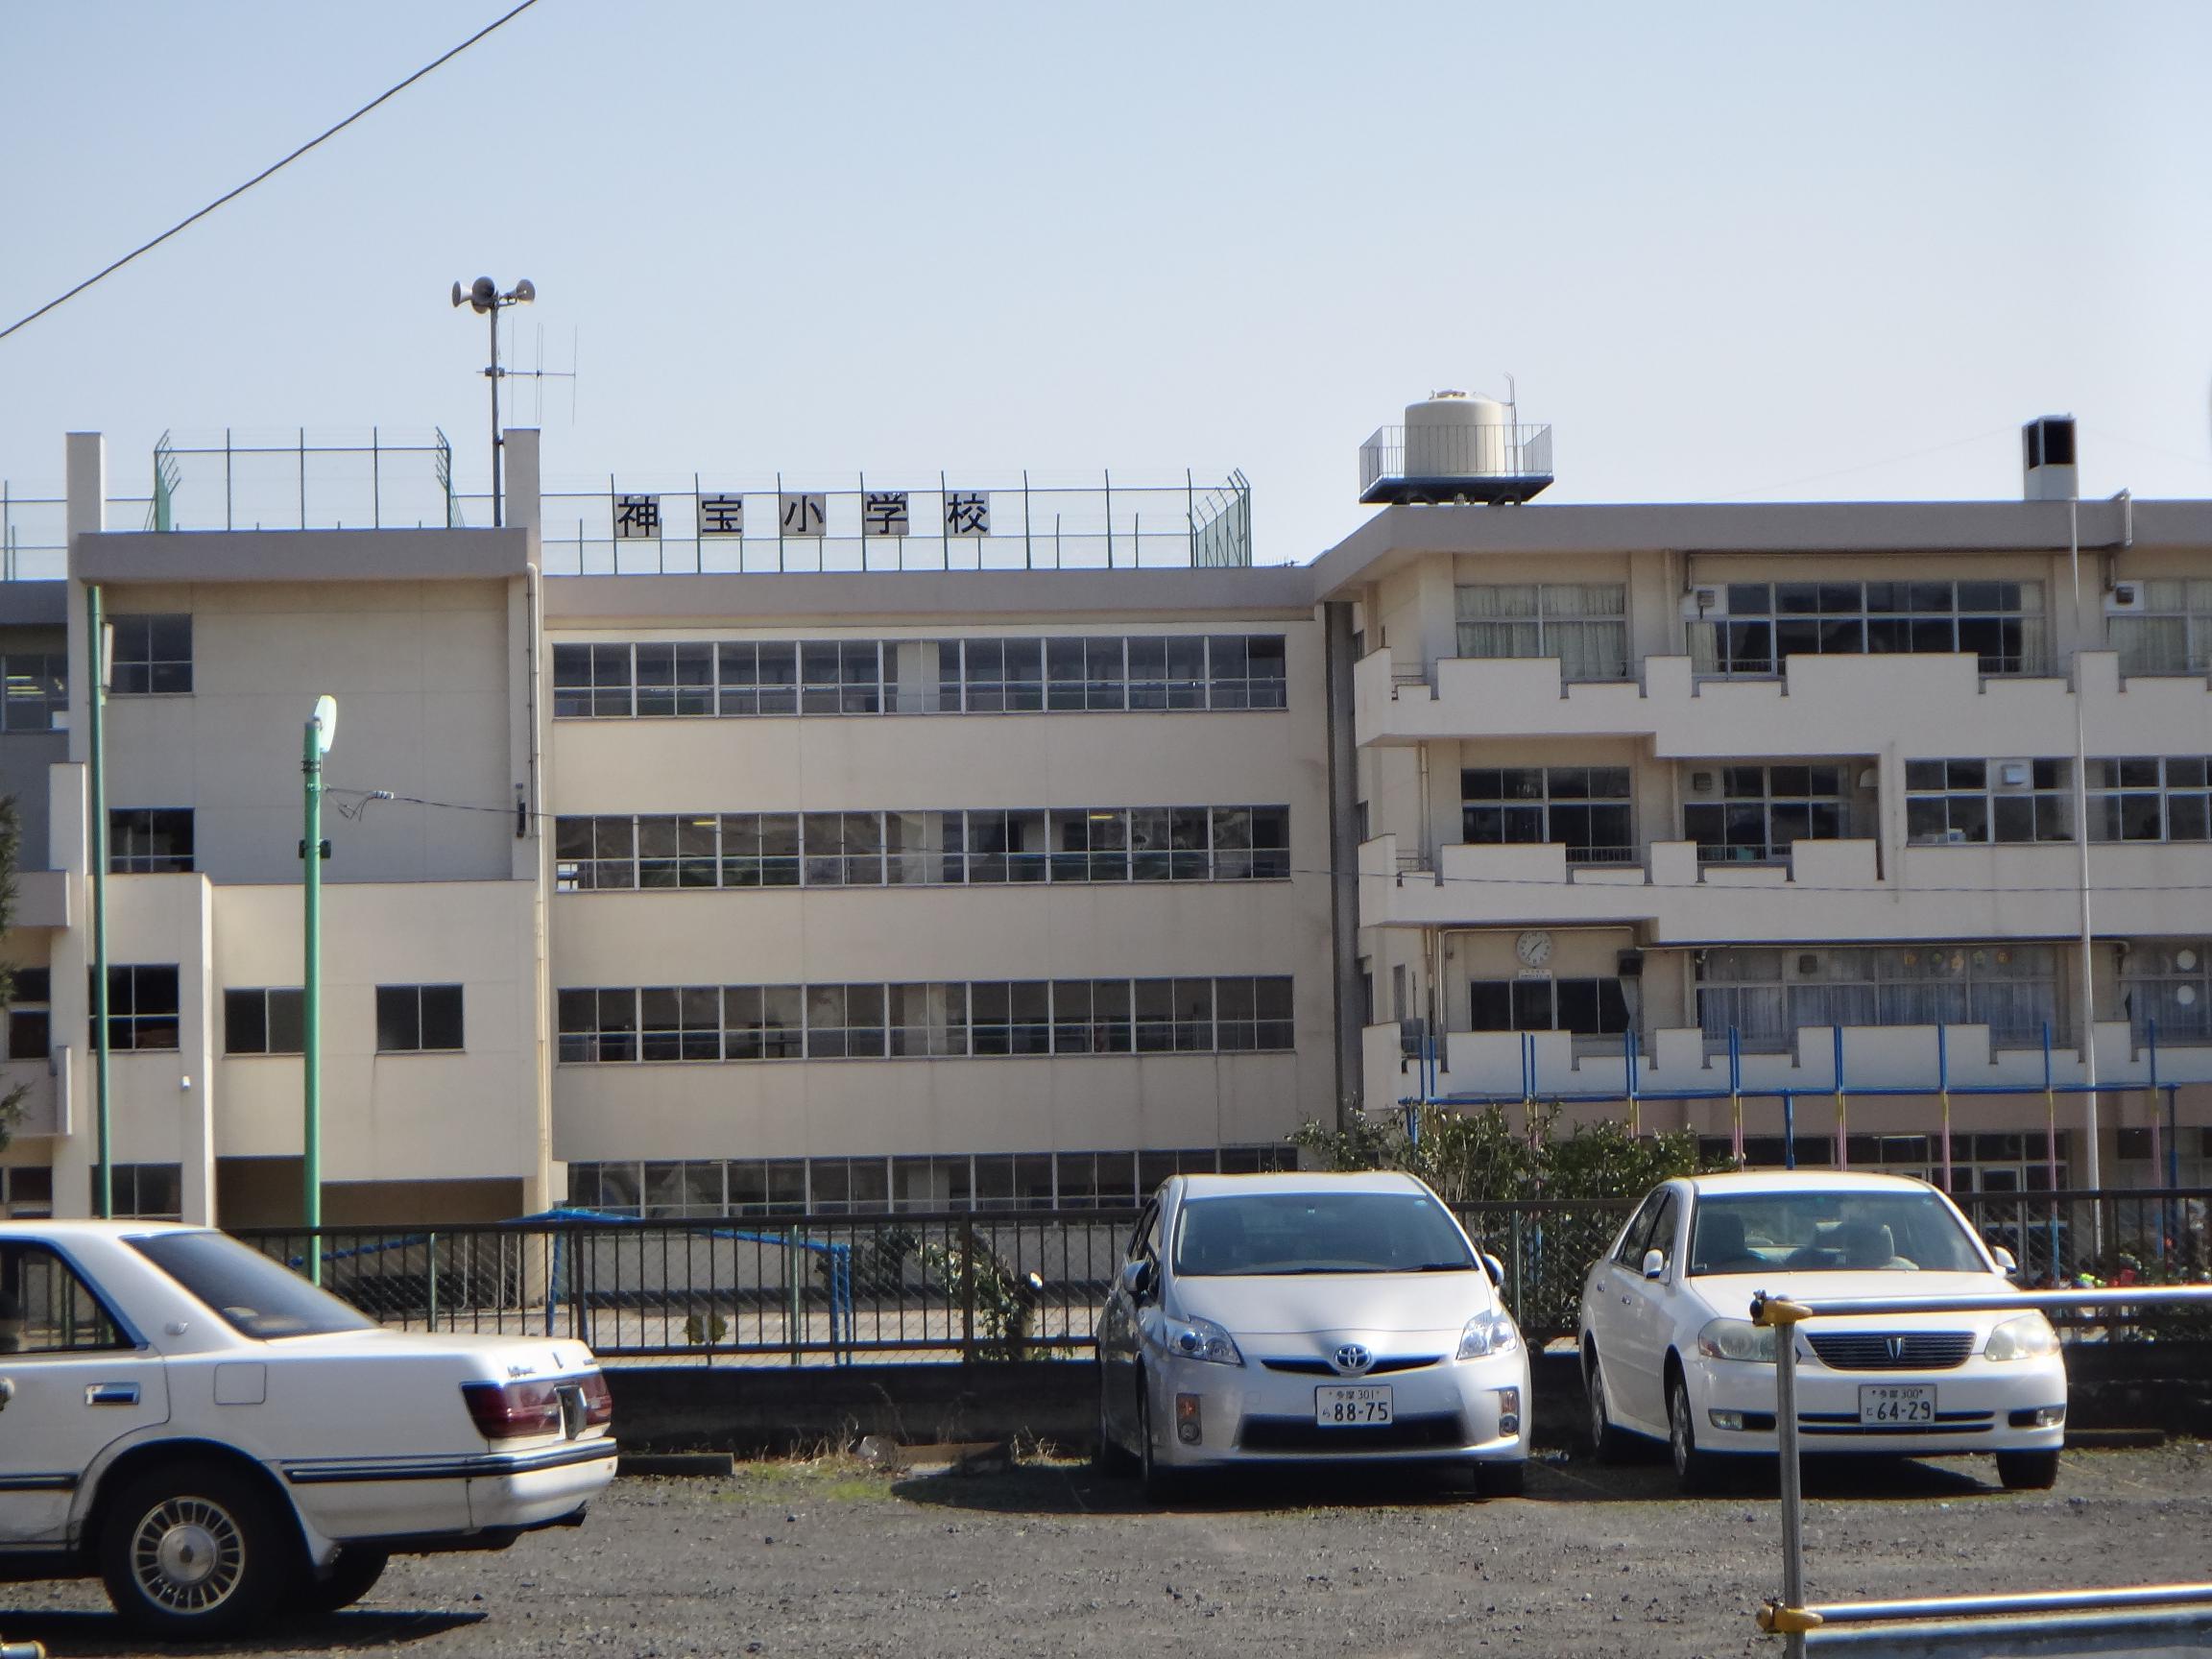 Primary school. Higashikurume Tatsugami treasure elementary school (elementary school) up to 500m